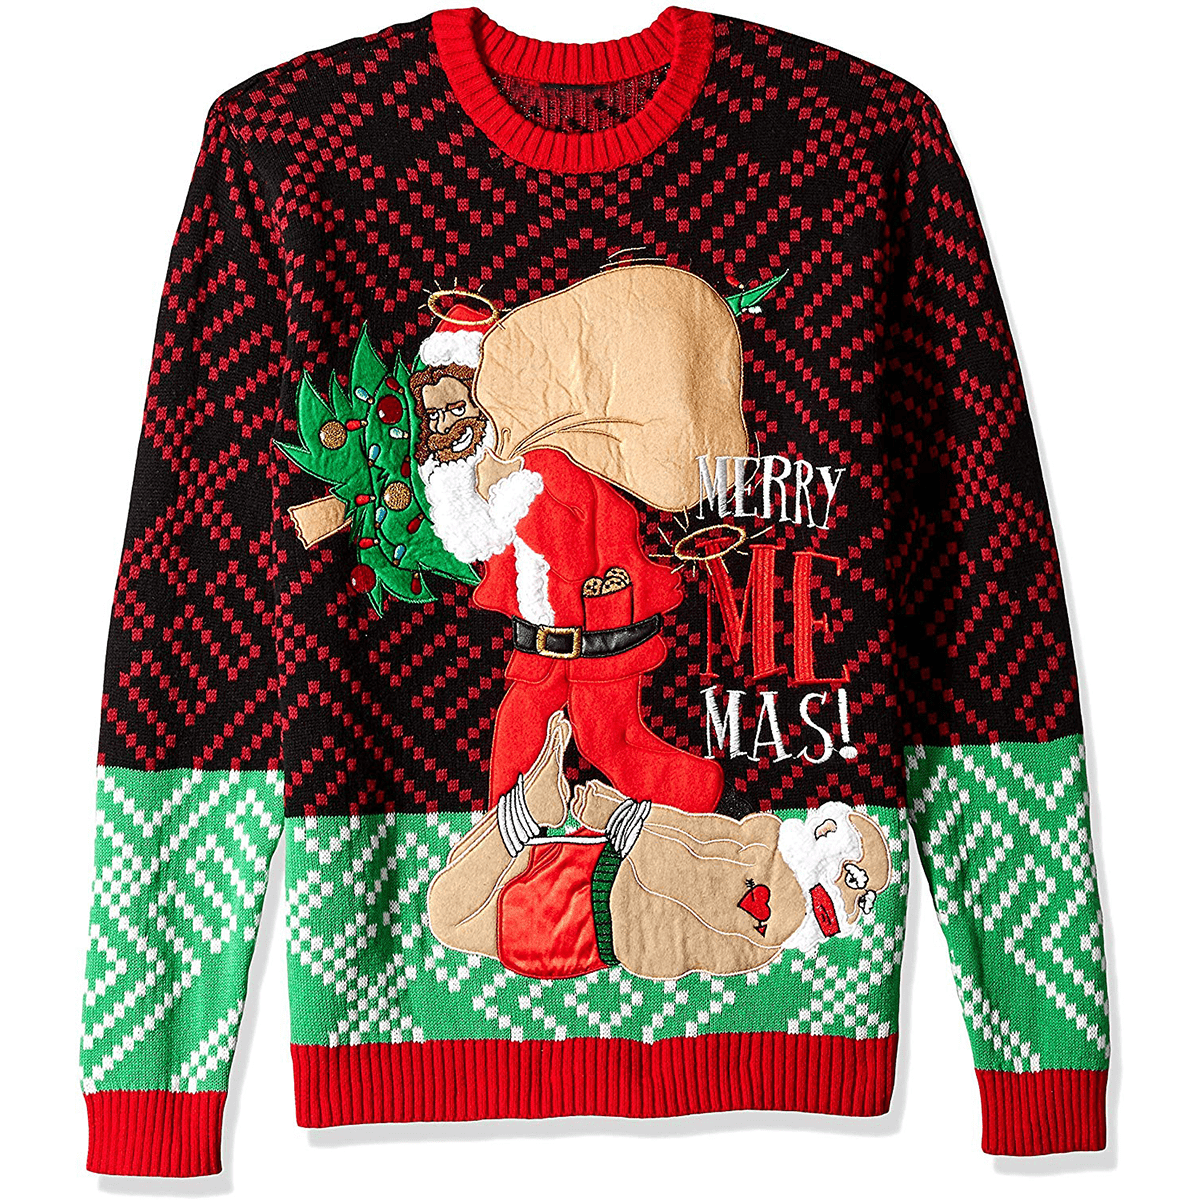 Merry Me Mas Ugly Christmas Sweater